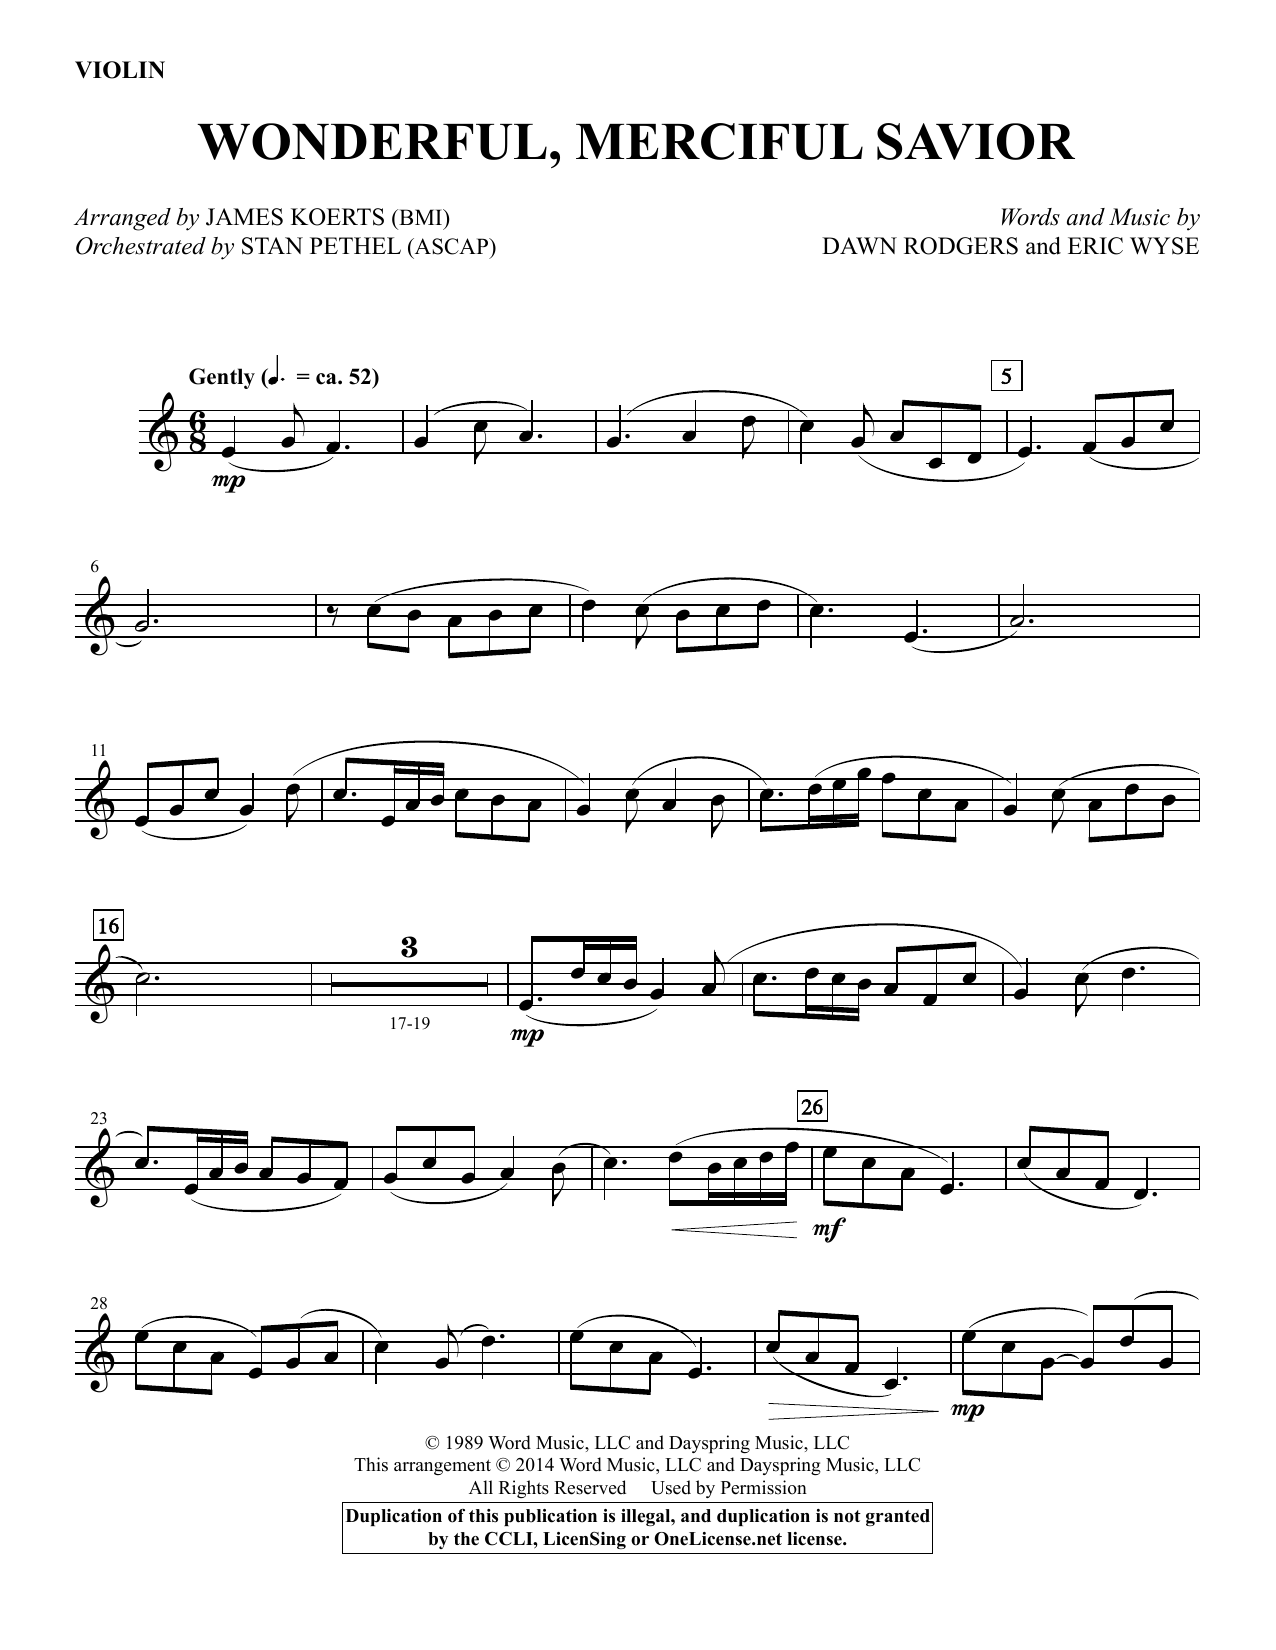 James Koerts Wonderful, Merciful Savior - Violin sheet music notes and chords. Download Printable PDF.